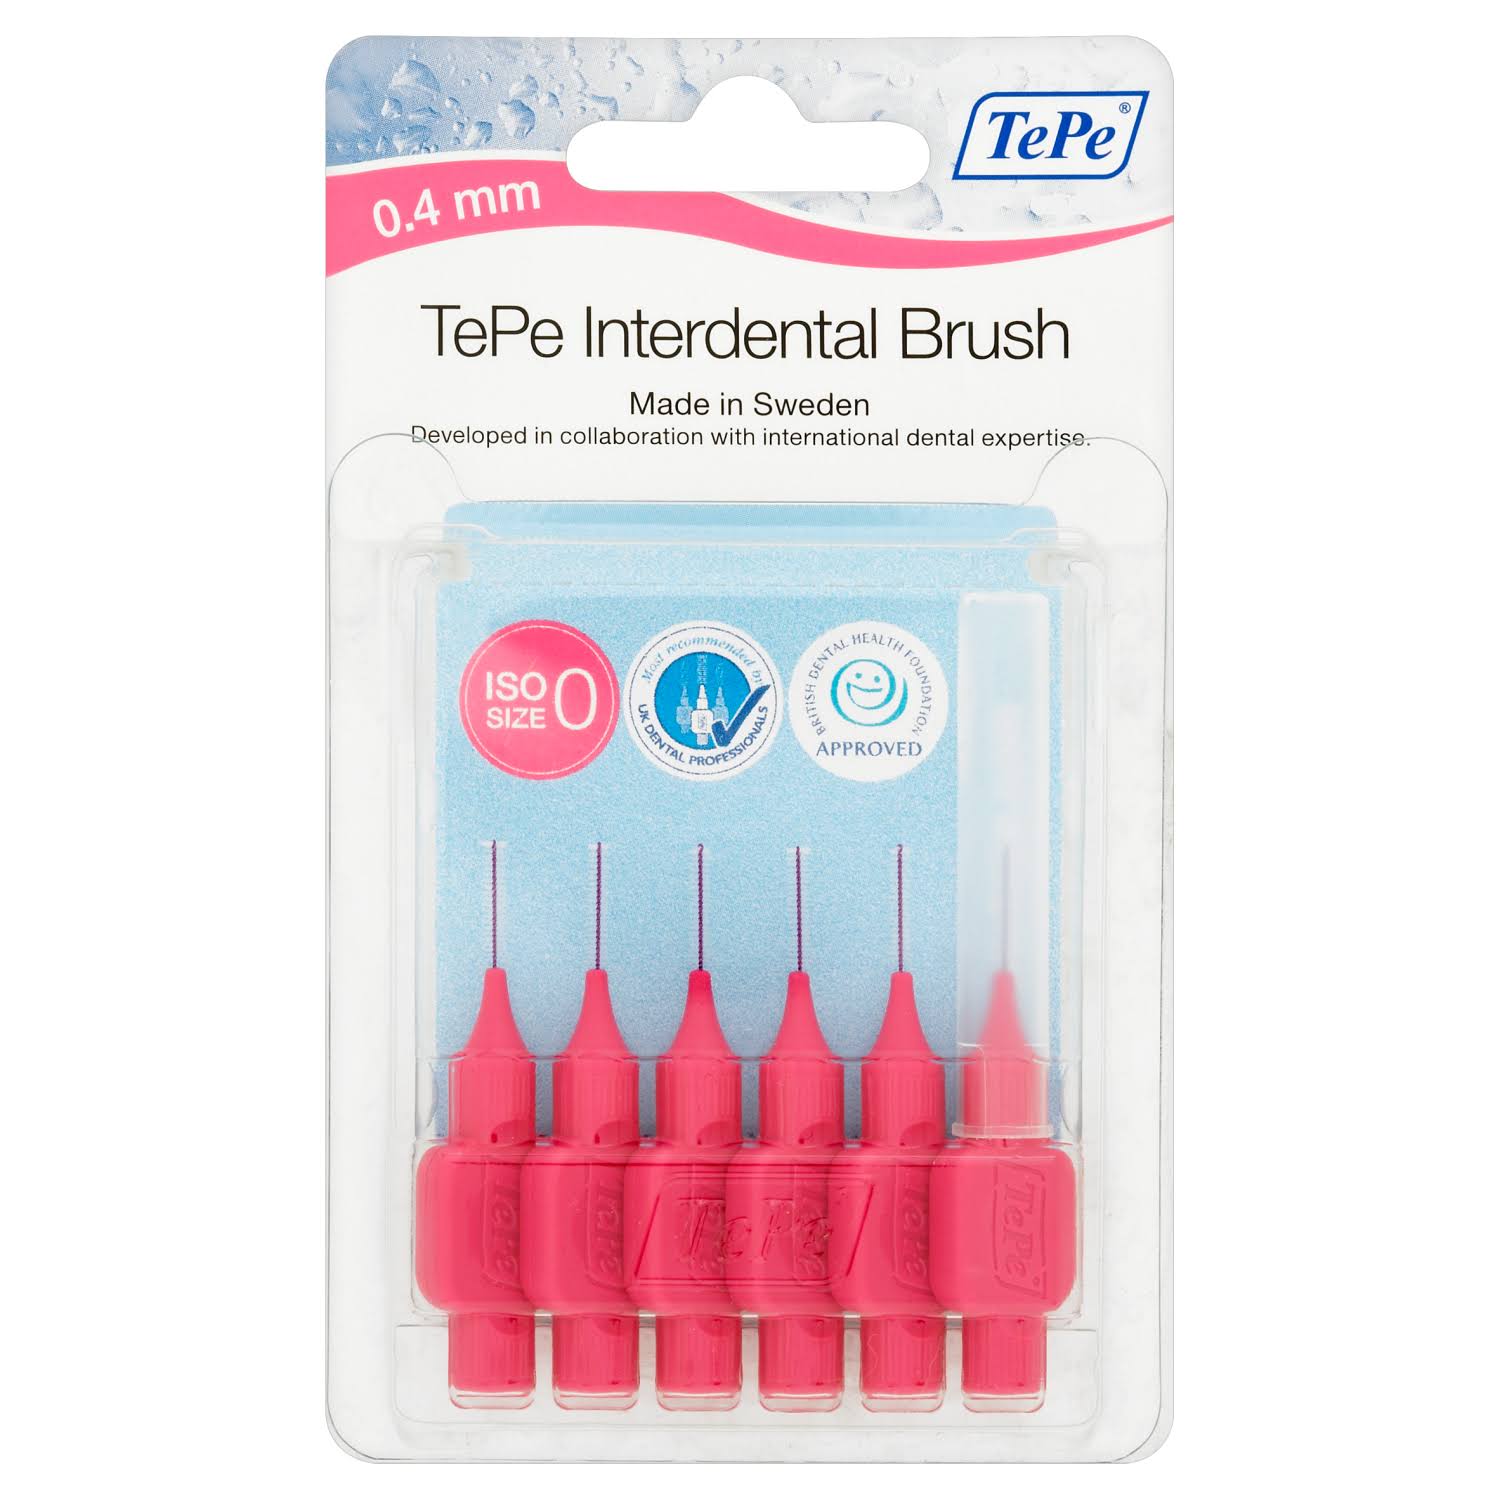 TePe Interdental Brush - Pink, 0.4mm